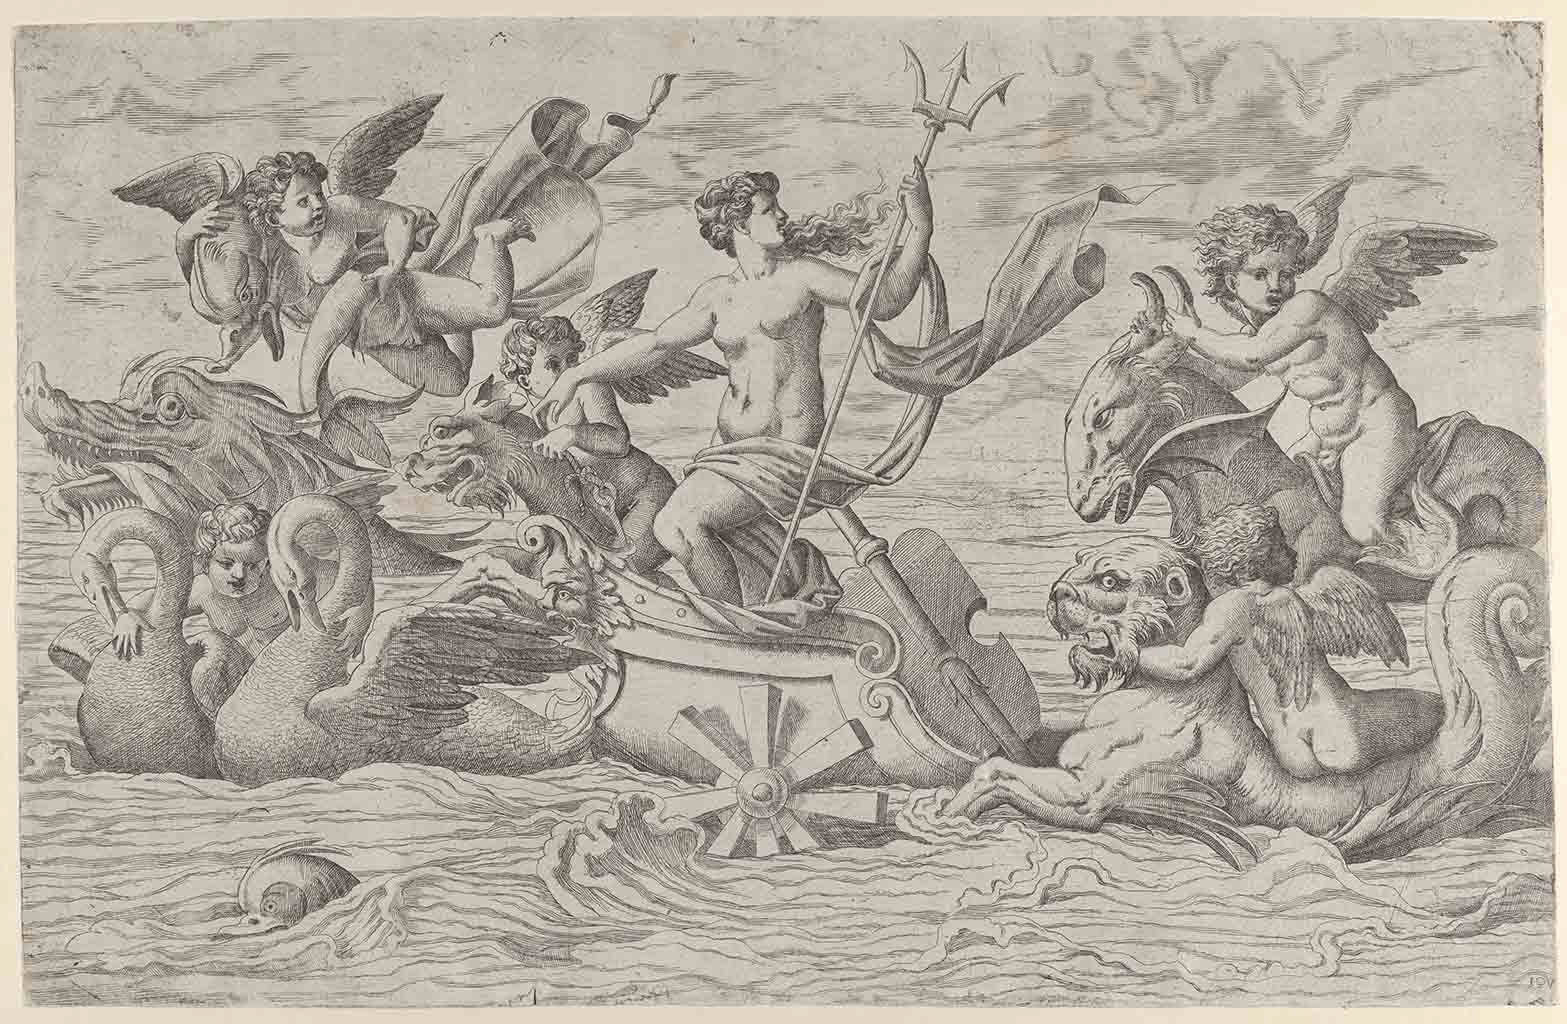 Джулио Романо (Giulio Romano) “Venus in a Chariot drawn by Two Swans“